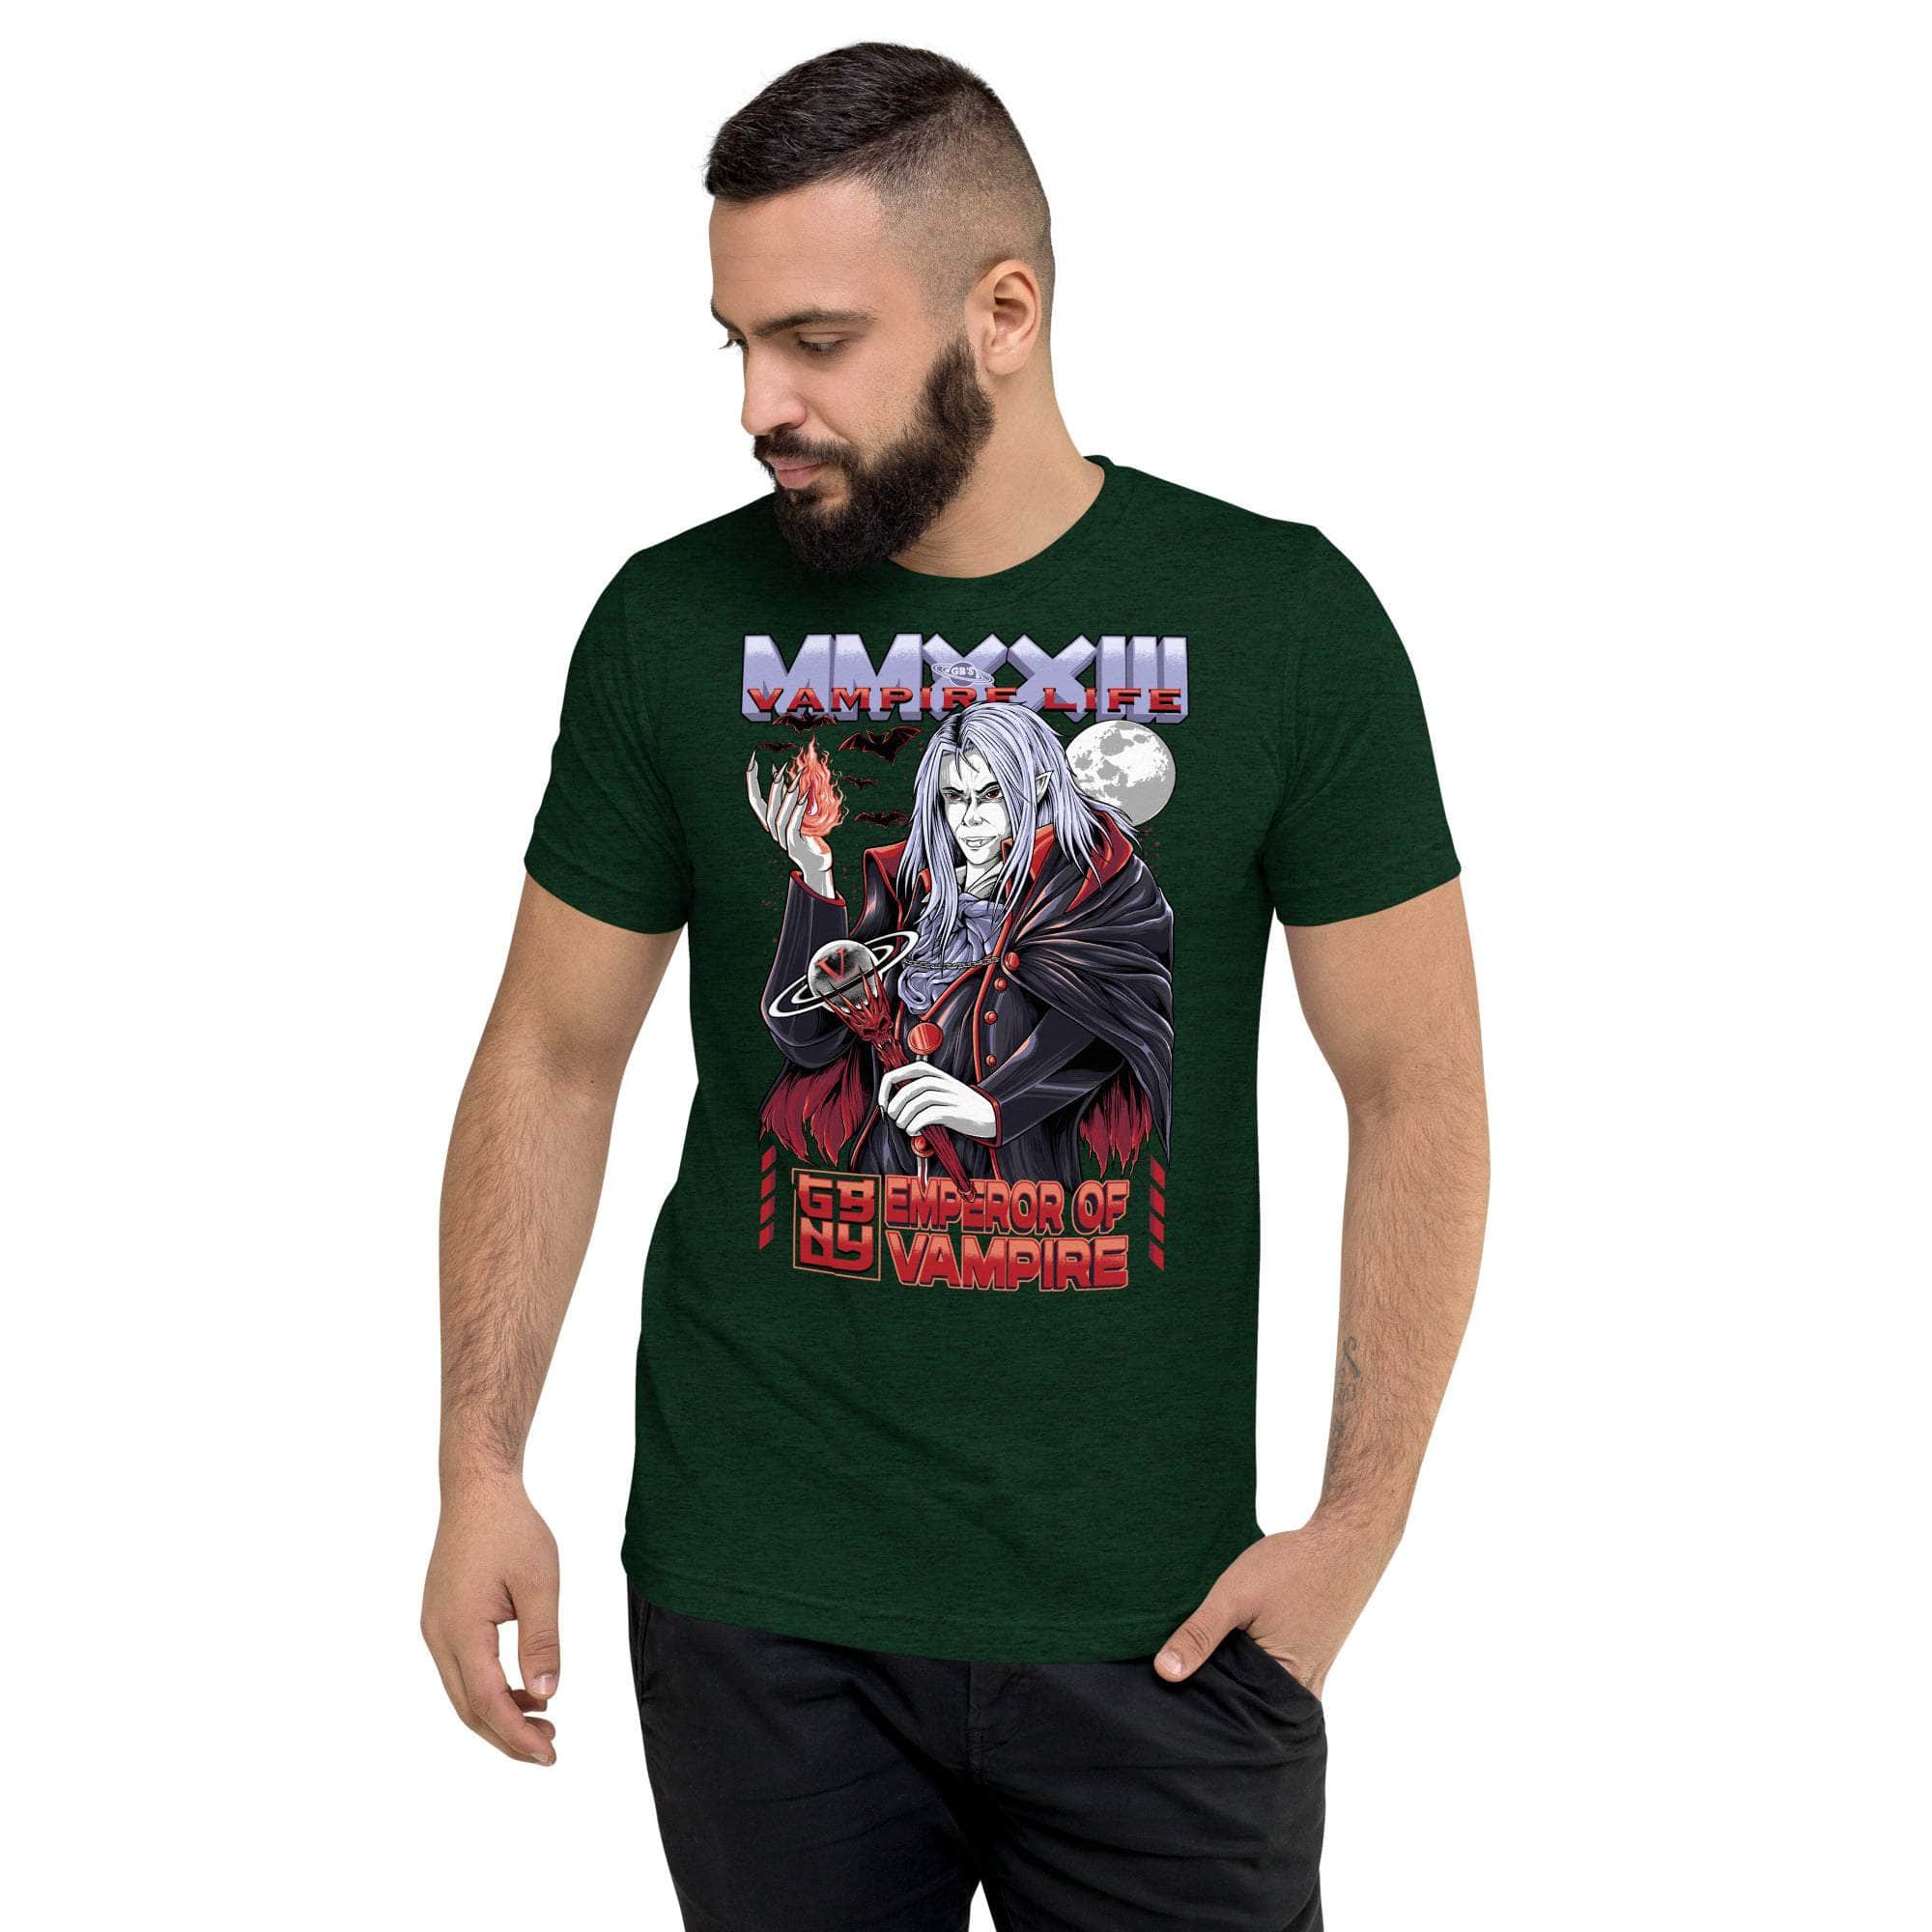 GBNY Emerald Triblend / XS Vamp Life X GBNY "Emperor Of Vamp" T-shirt - Men's 1895261_6520